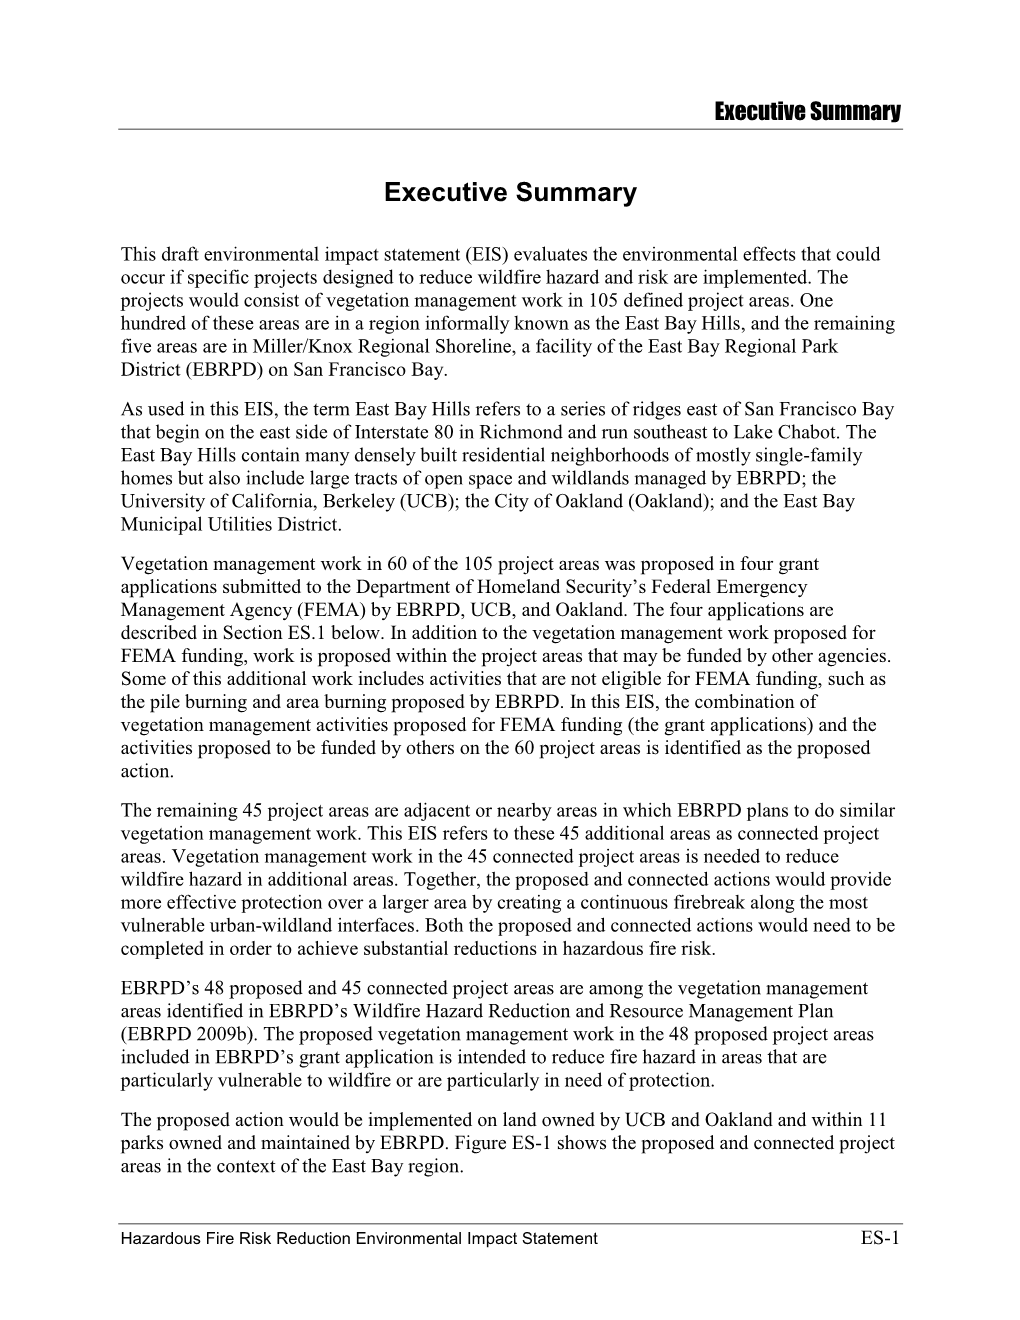 Executive+Summary-East